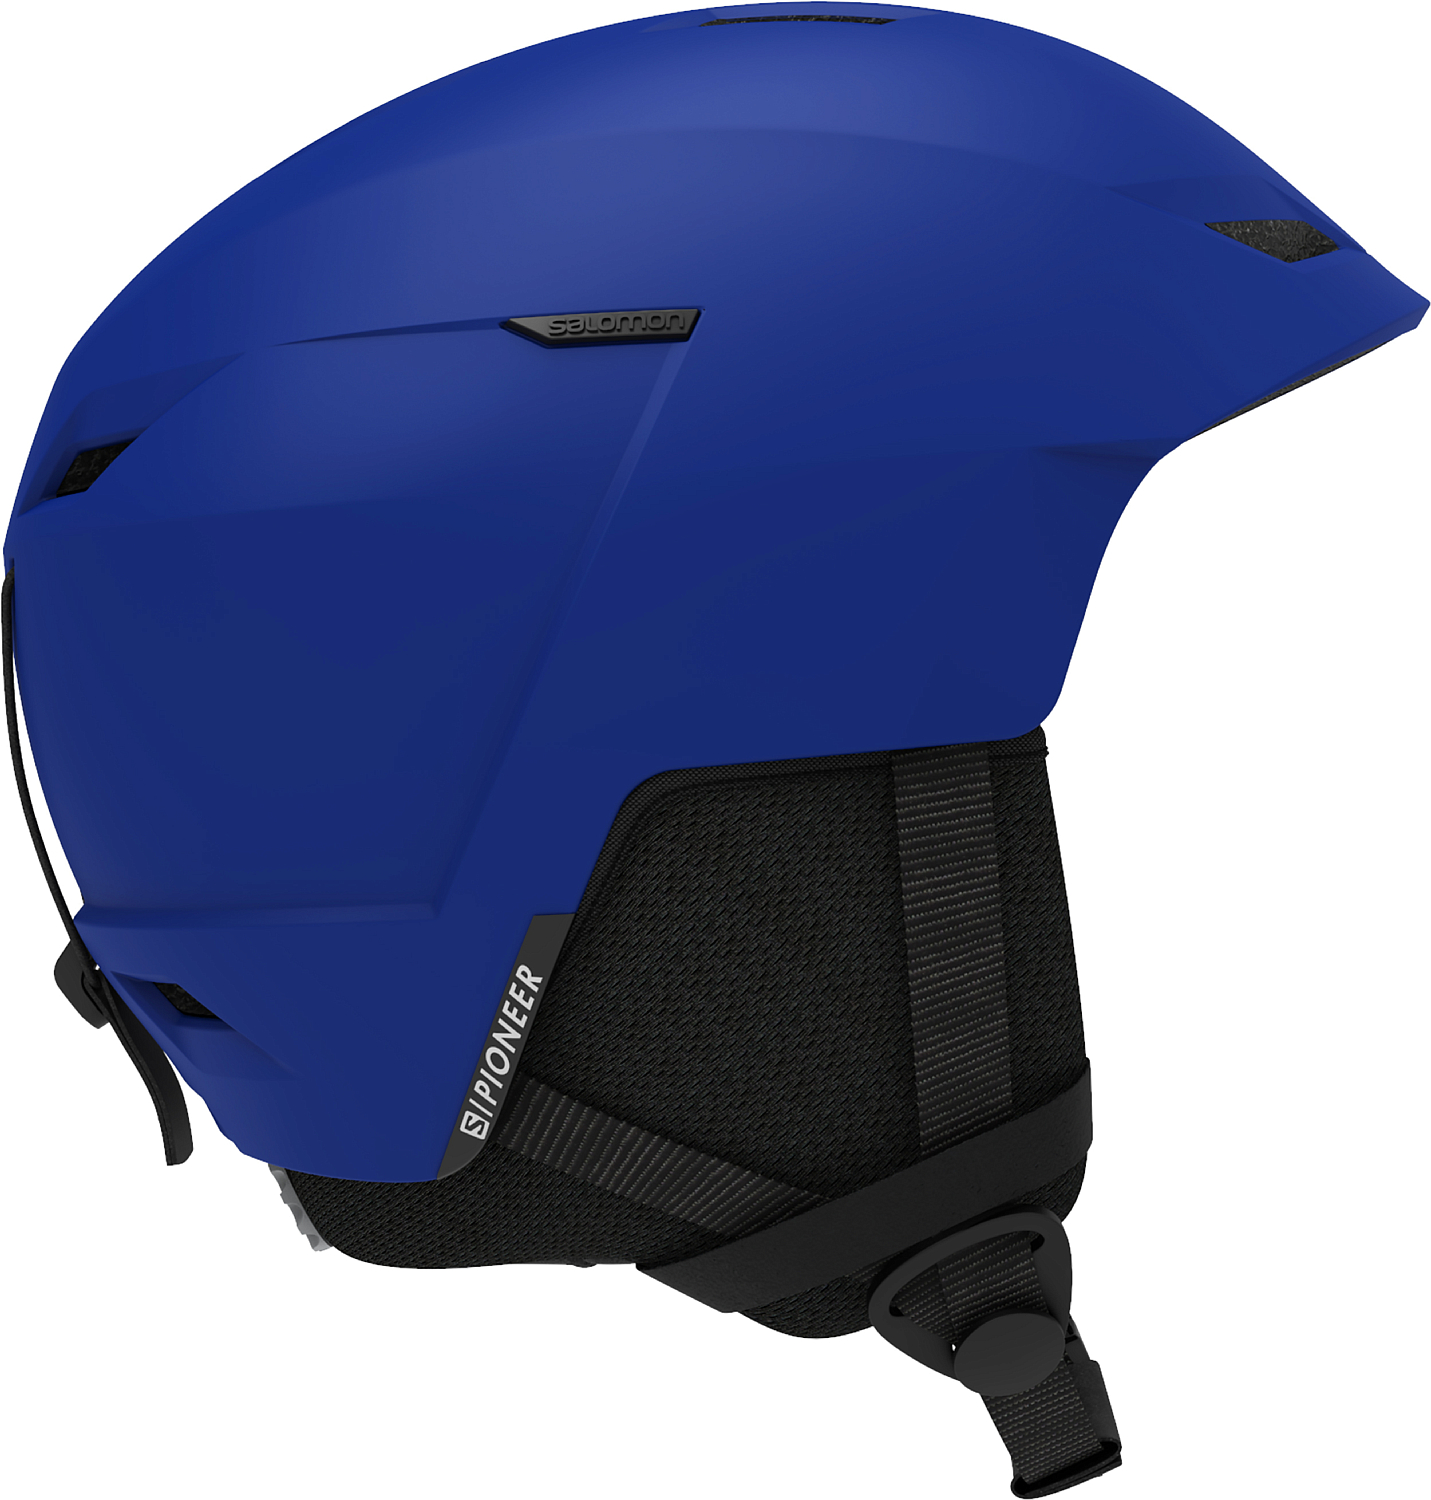 Зимний Шлем SALOMON 2020-21 Pioneer LT Access Race Blue